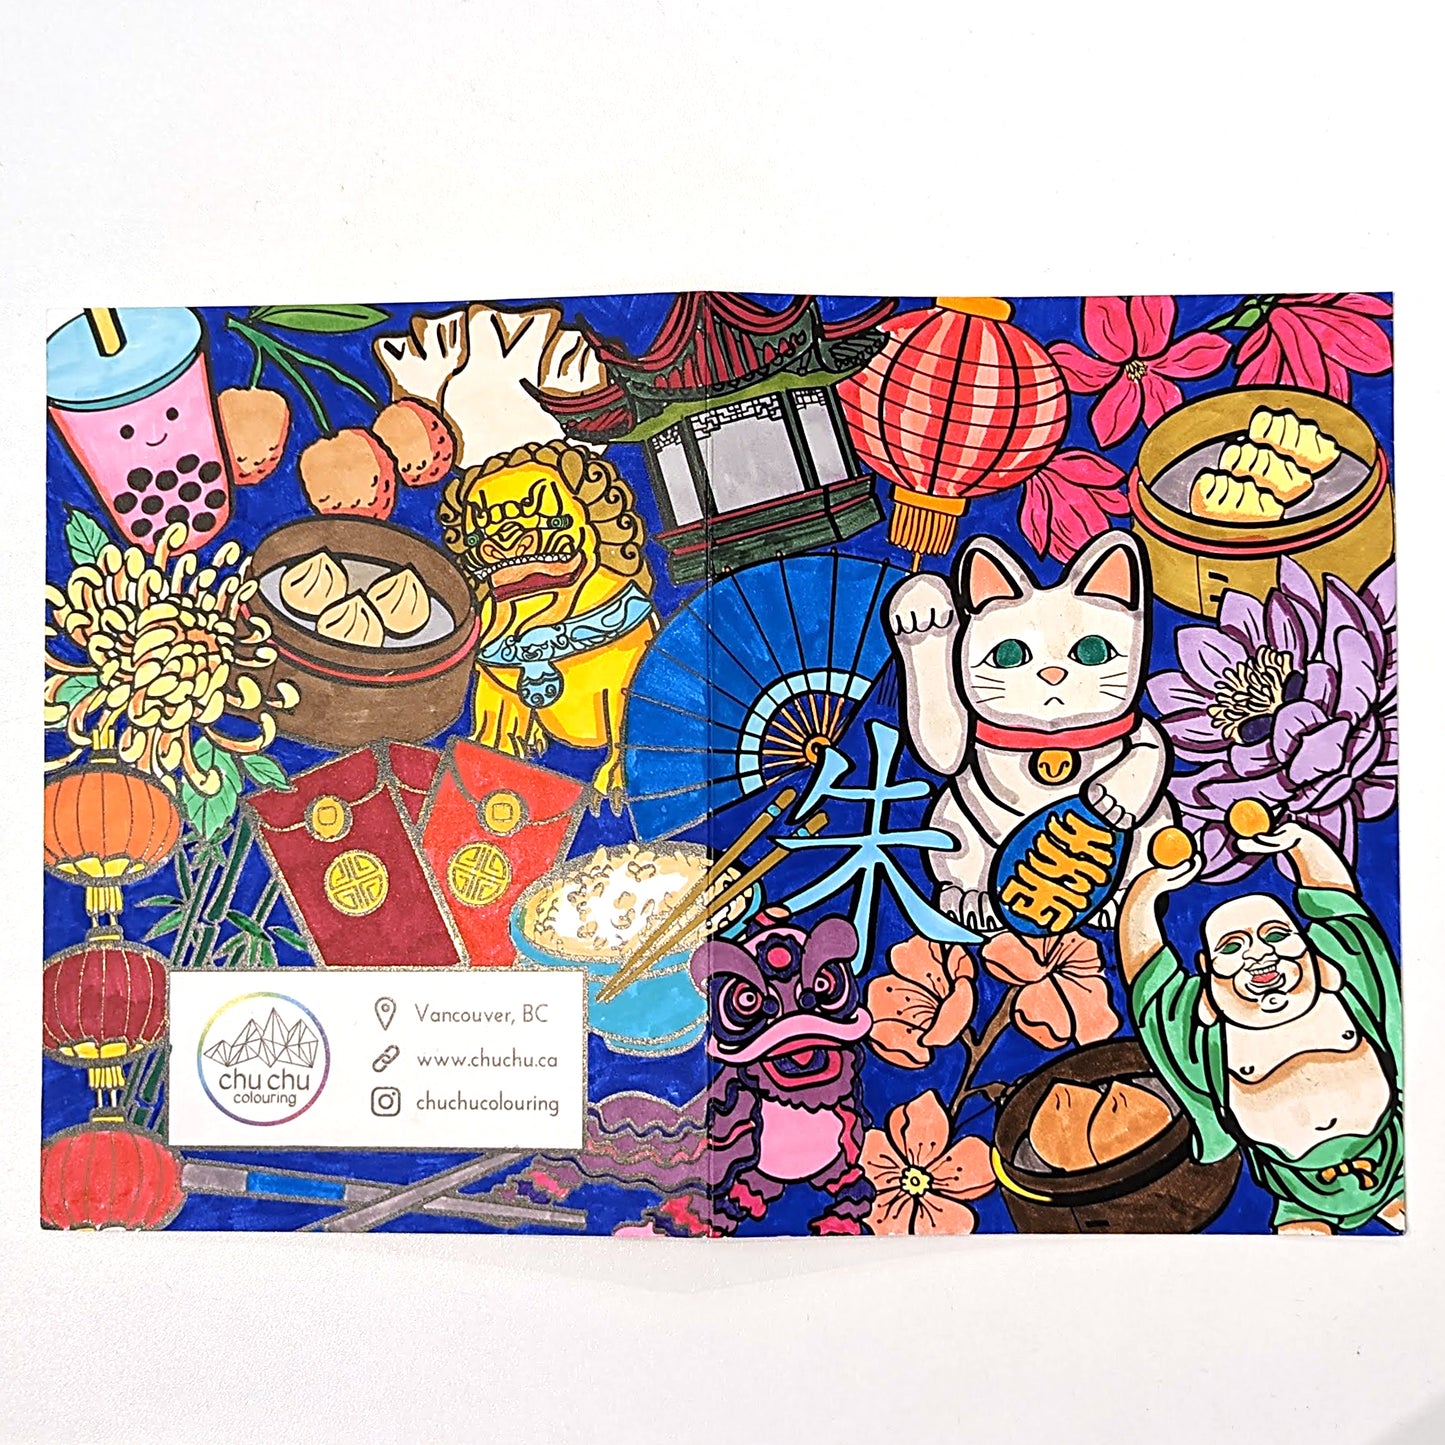 Chu Chu Mural Colouring Greeting Cards | Set of 3